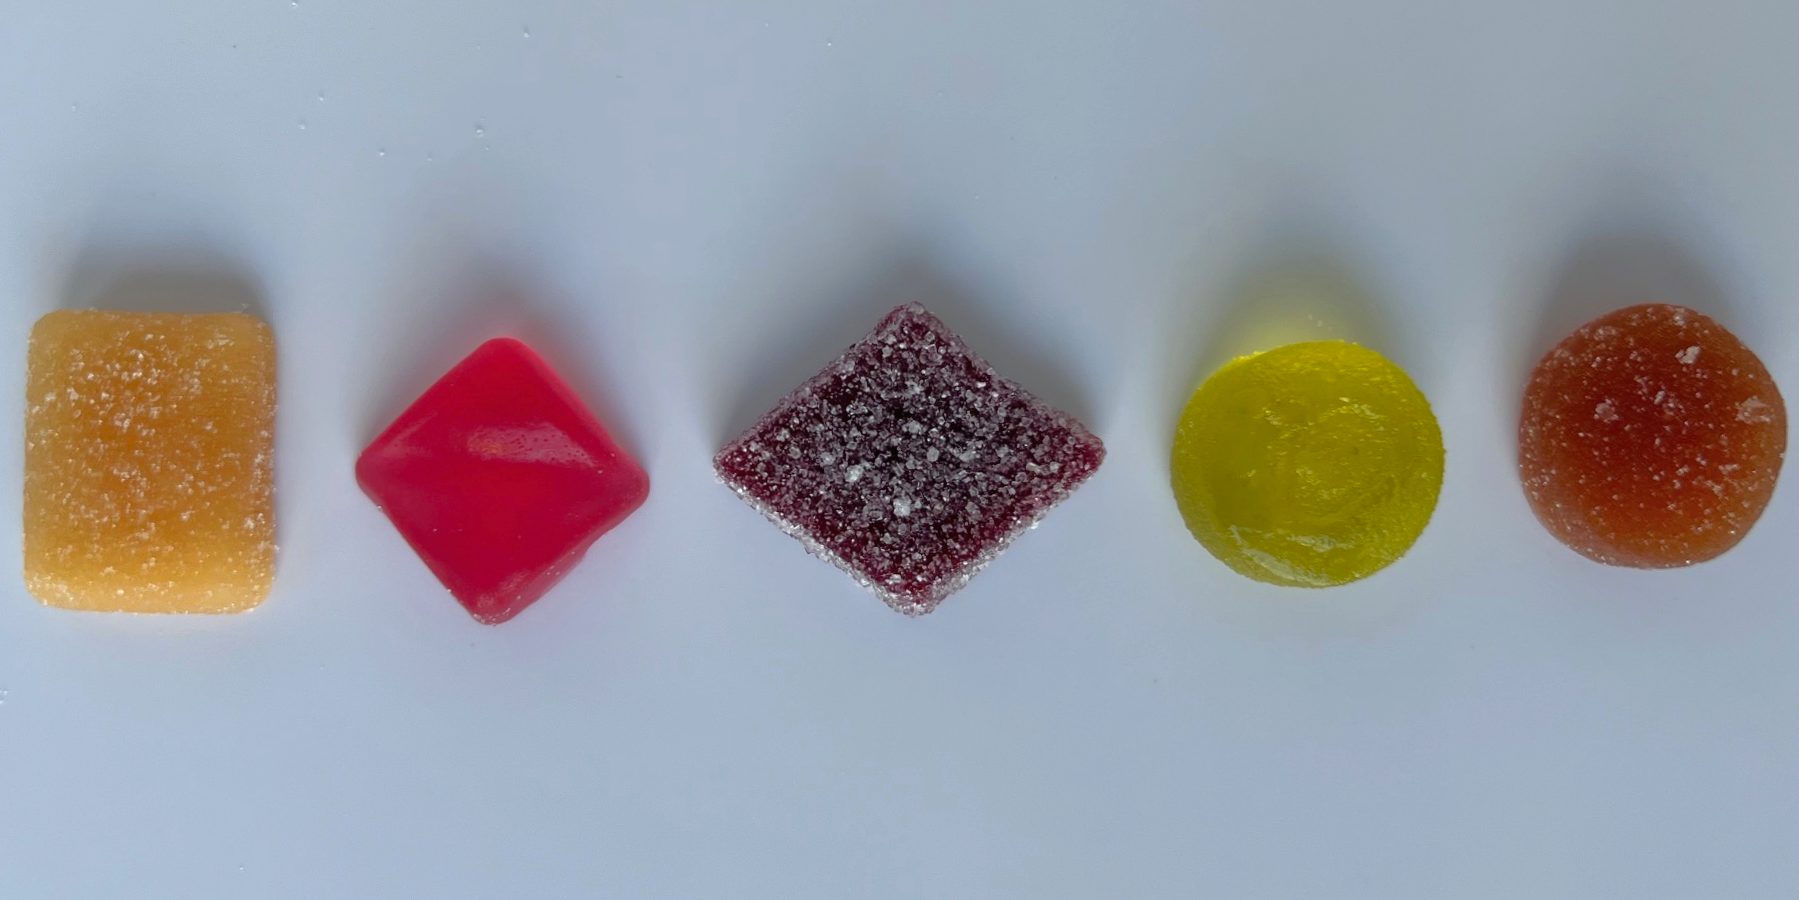 Five cannabis gummies in a row: orange square, pink diamond, purple diamond, yellow-green circle, and a redish pink circle.